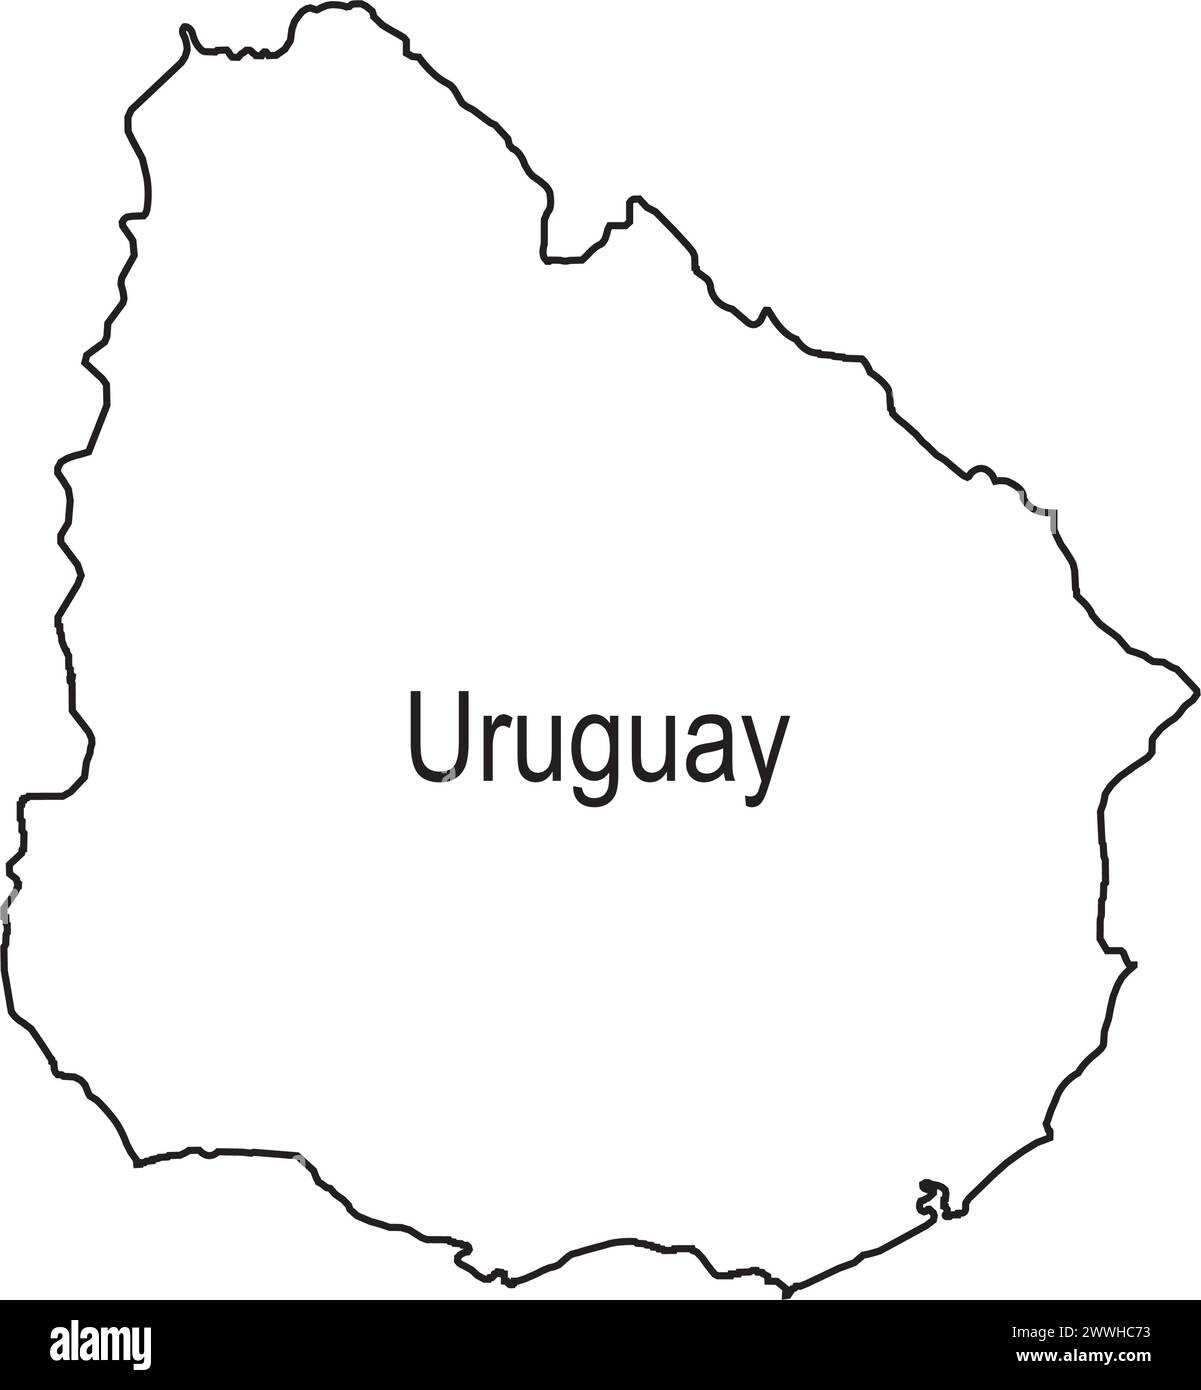 Uruguay map icon vector illustration background design Stock Vector